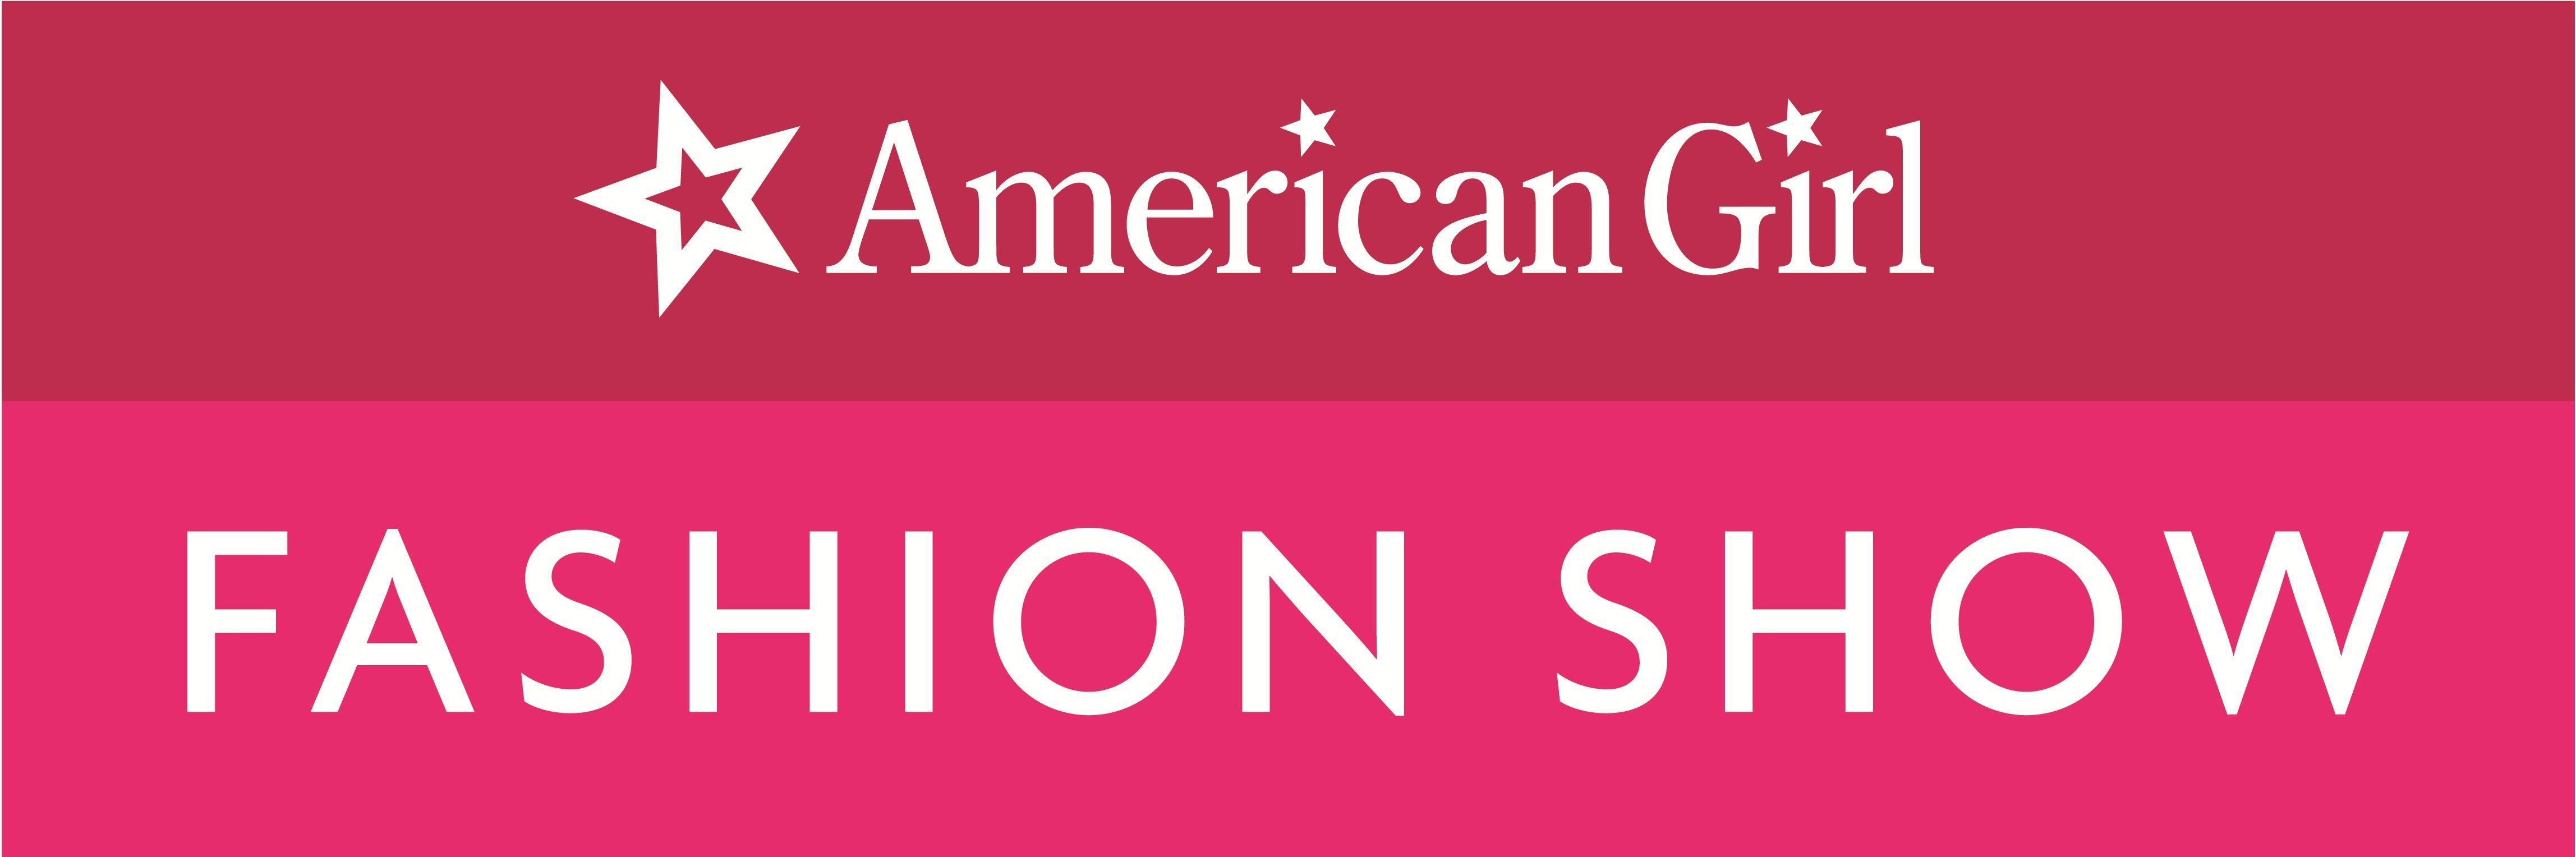 American Fashion Logo - American girl Logos